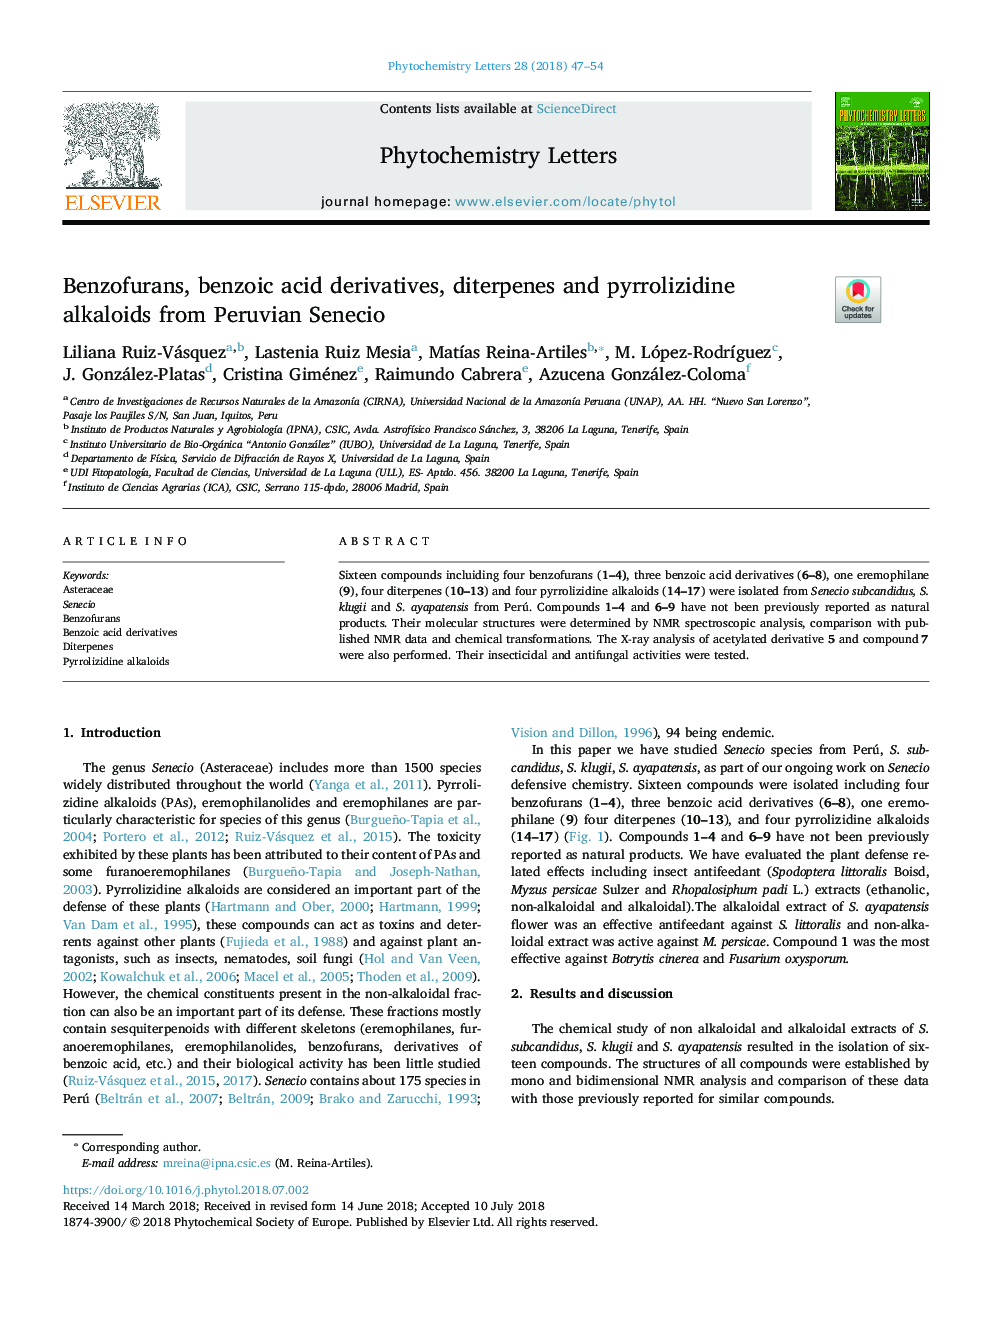 Benzofurans, benzoic acid derivatives, diterpenes and pyrrolizidine alkaloids from Peruvian Senecio